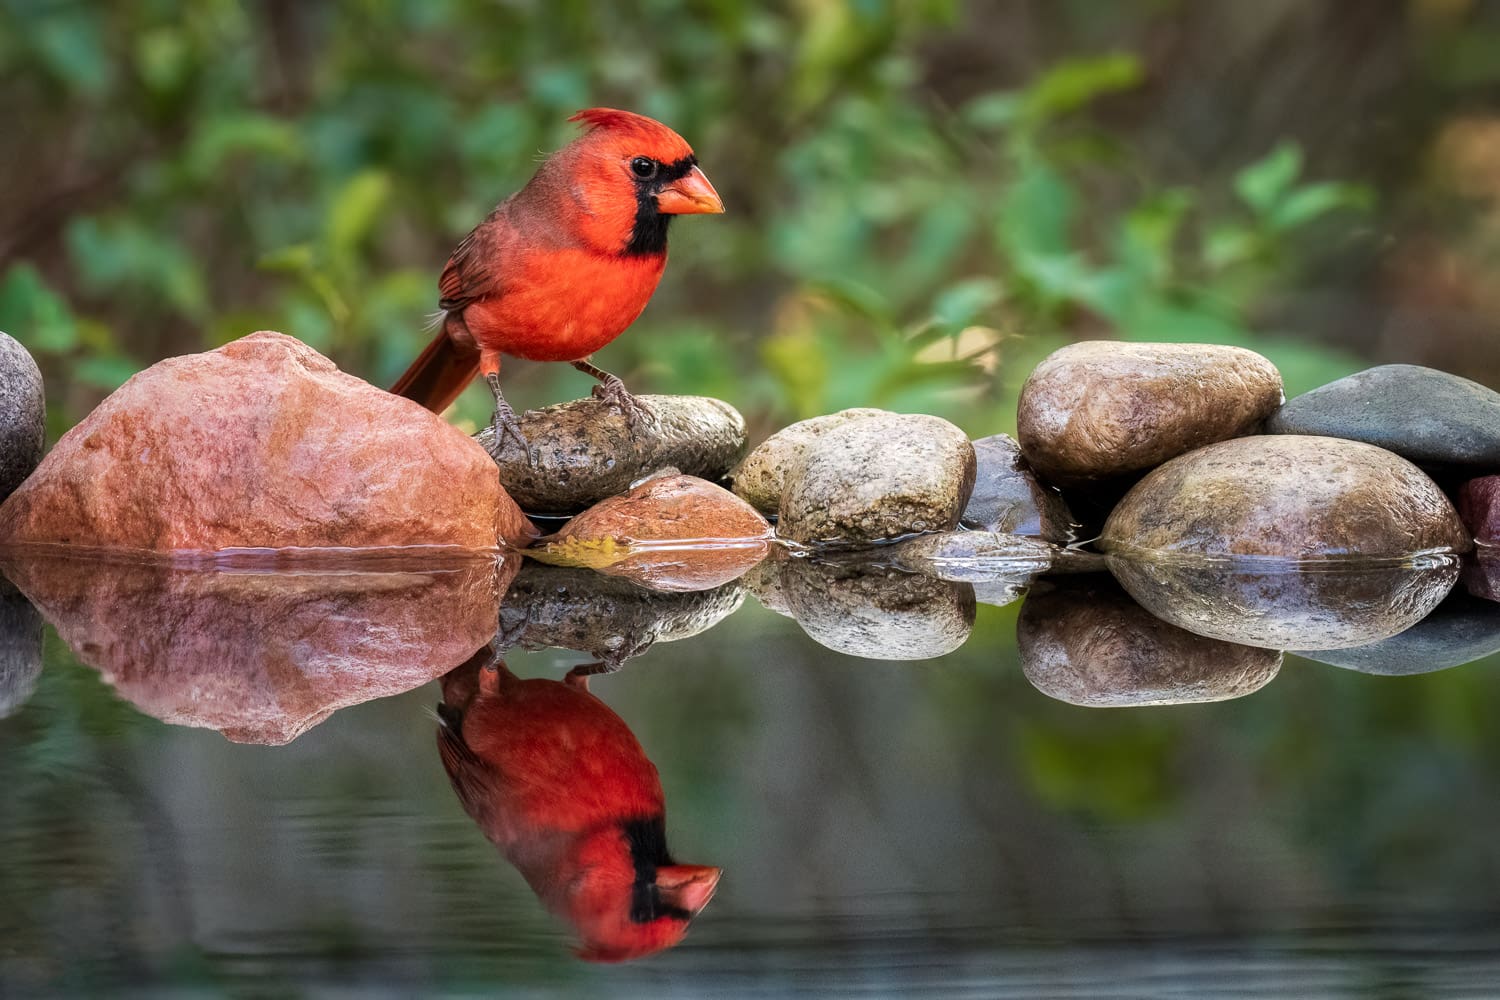 Male Northern Cardinal at a reflecting pool.